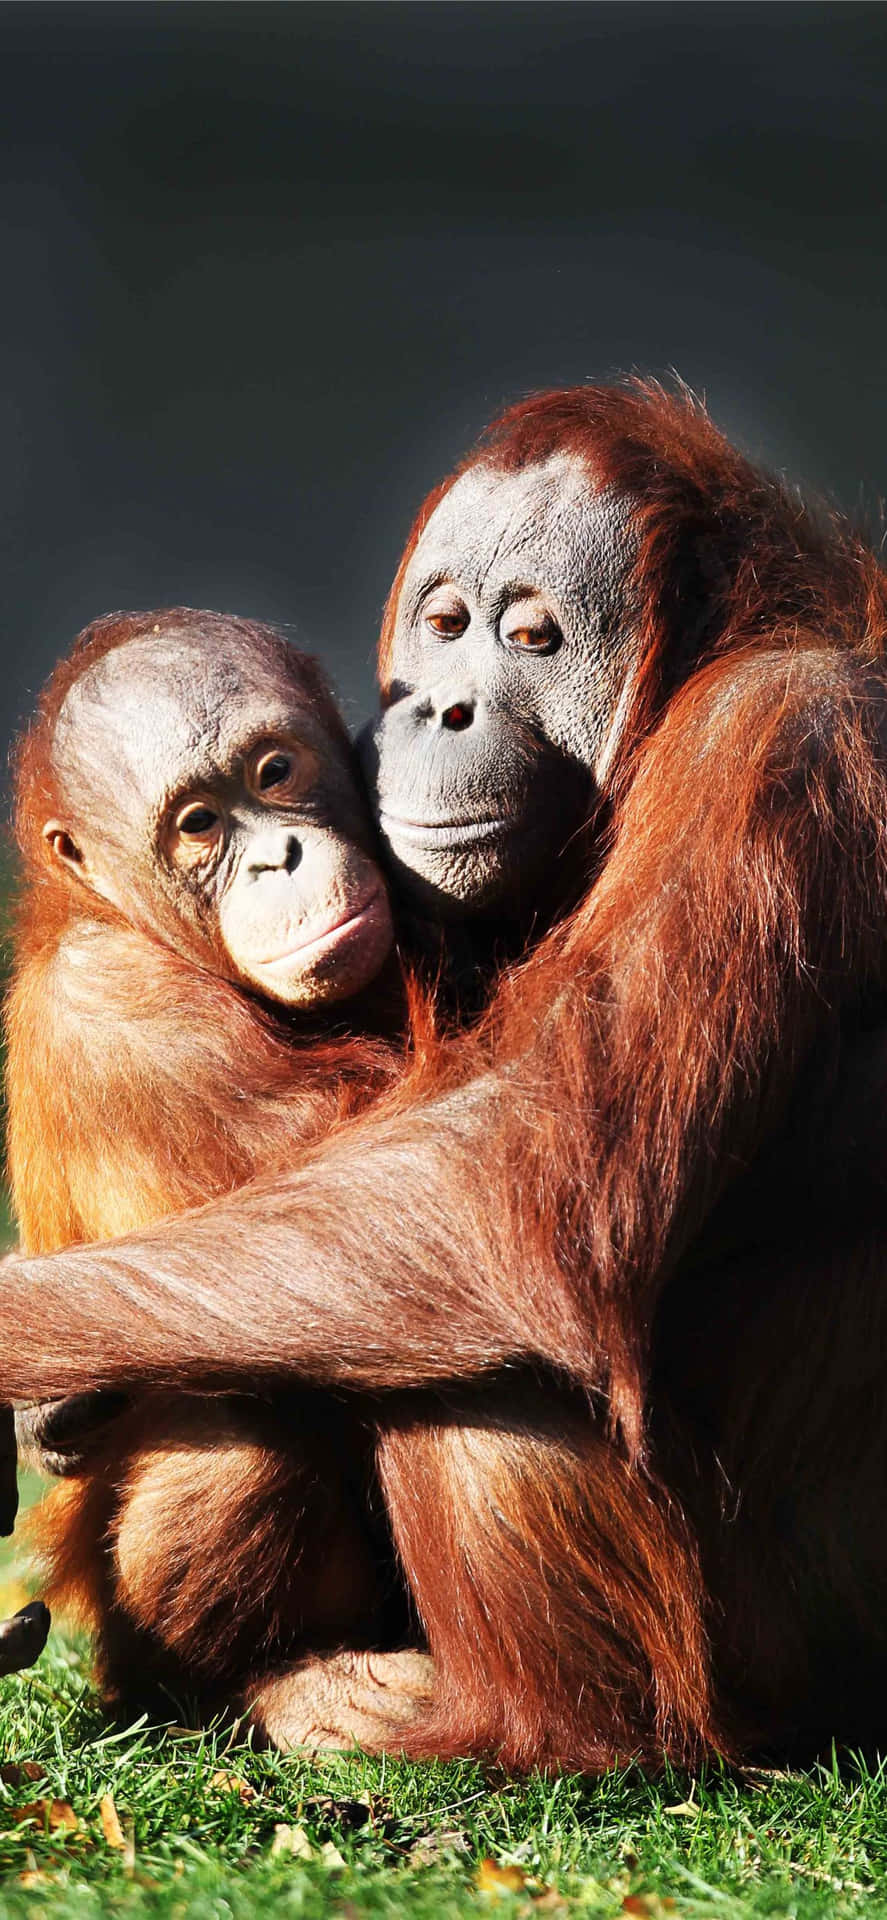 Orangutan Hugging Each Other Wallpaper